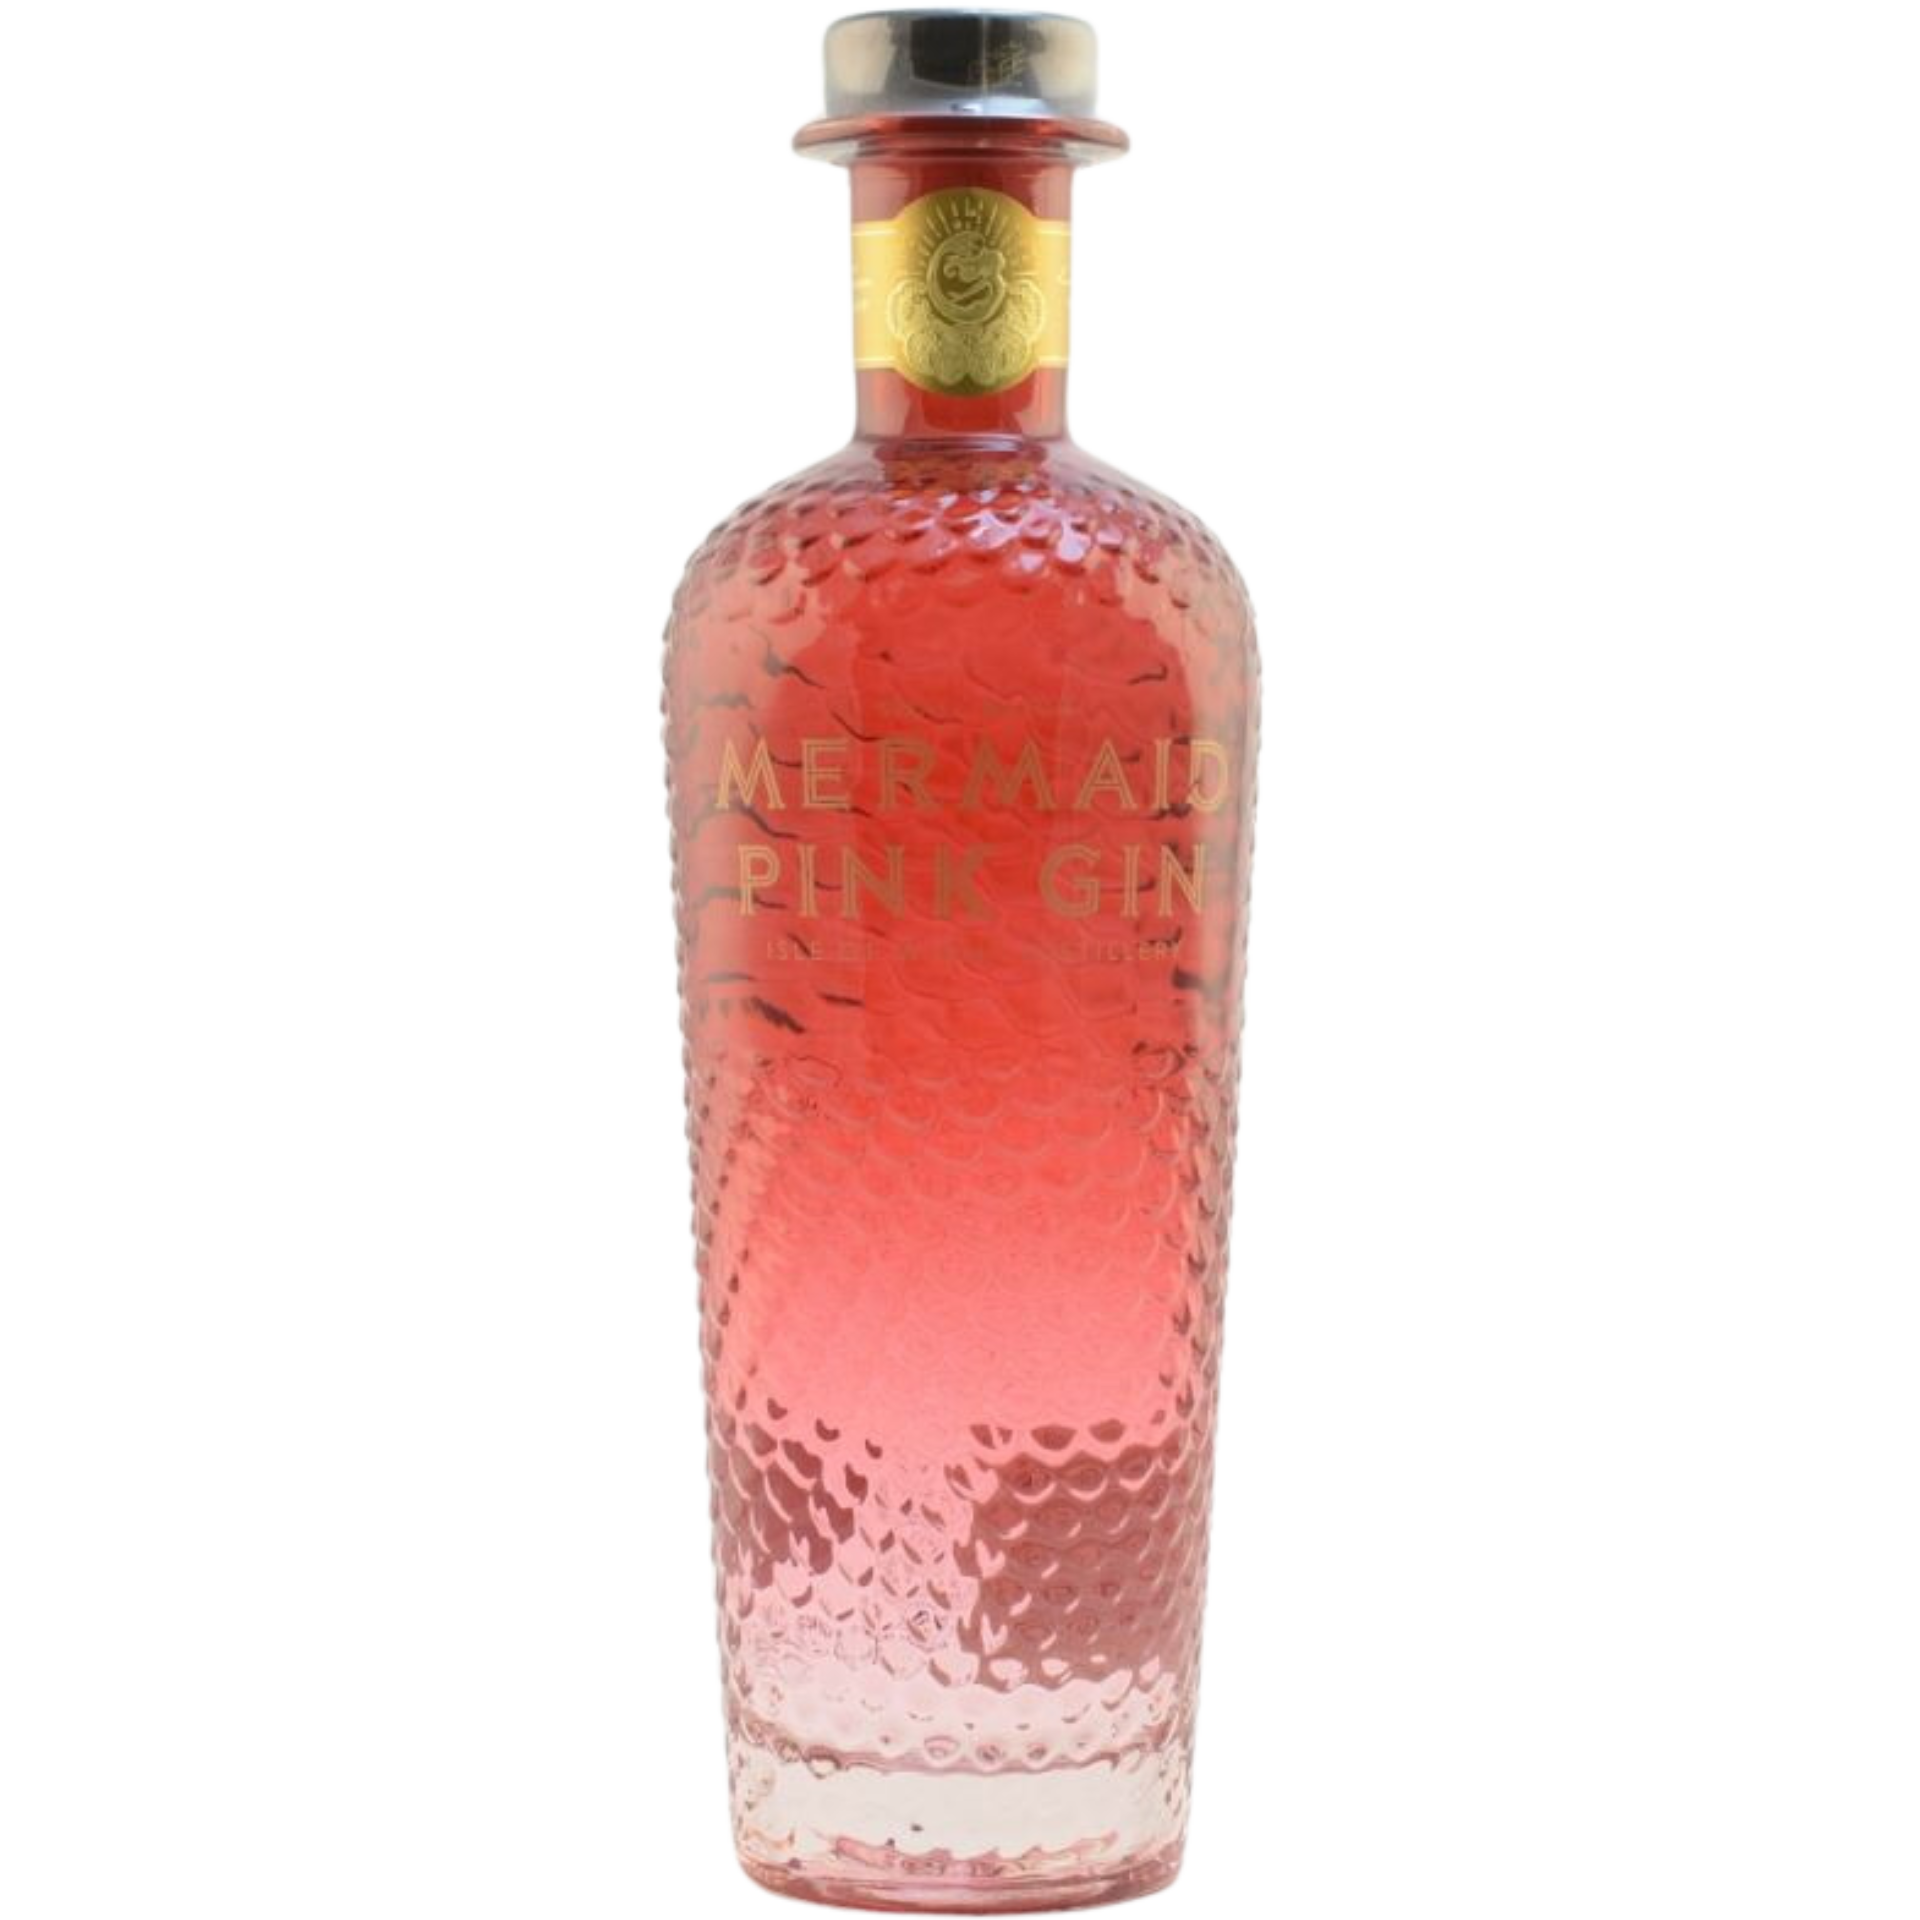 Mermaid Pink Gin 38% 0,7l